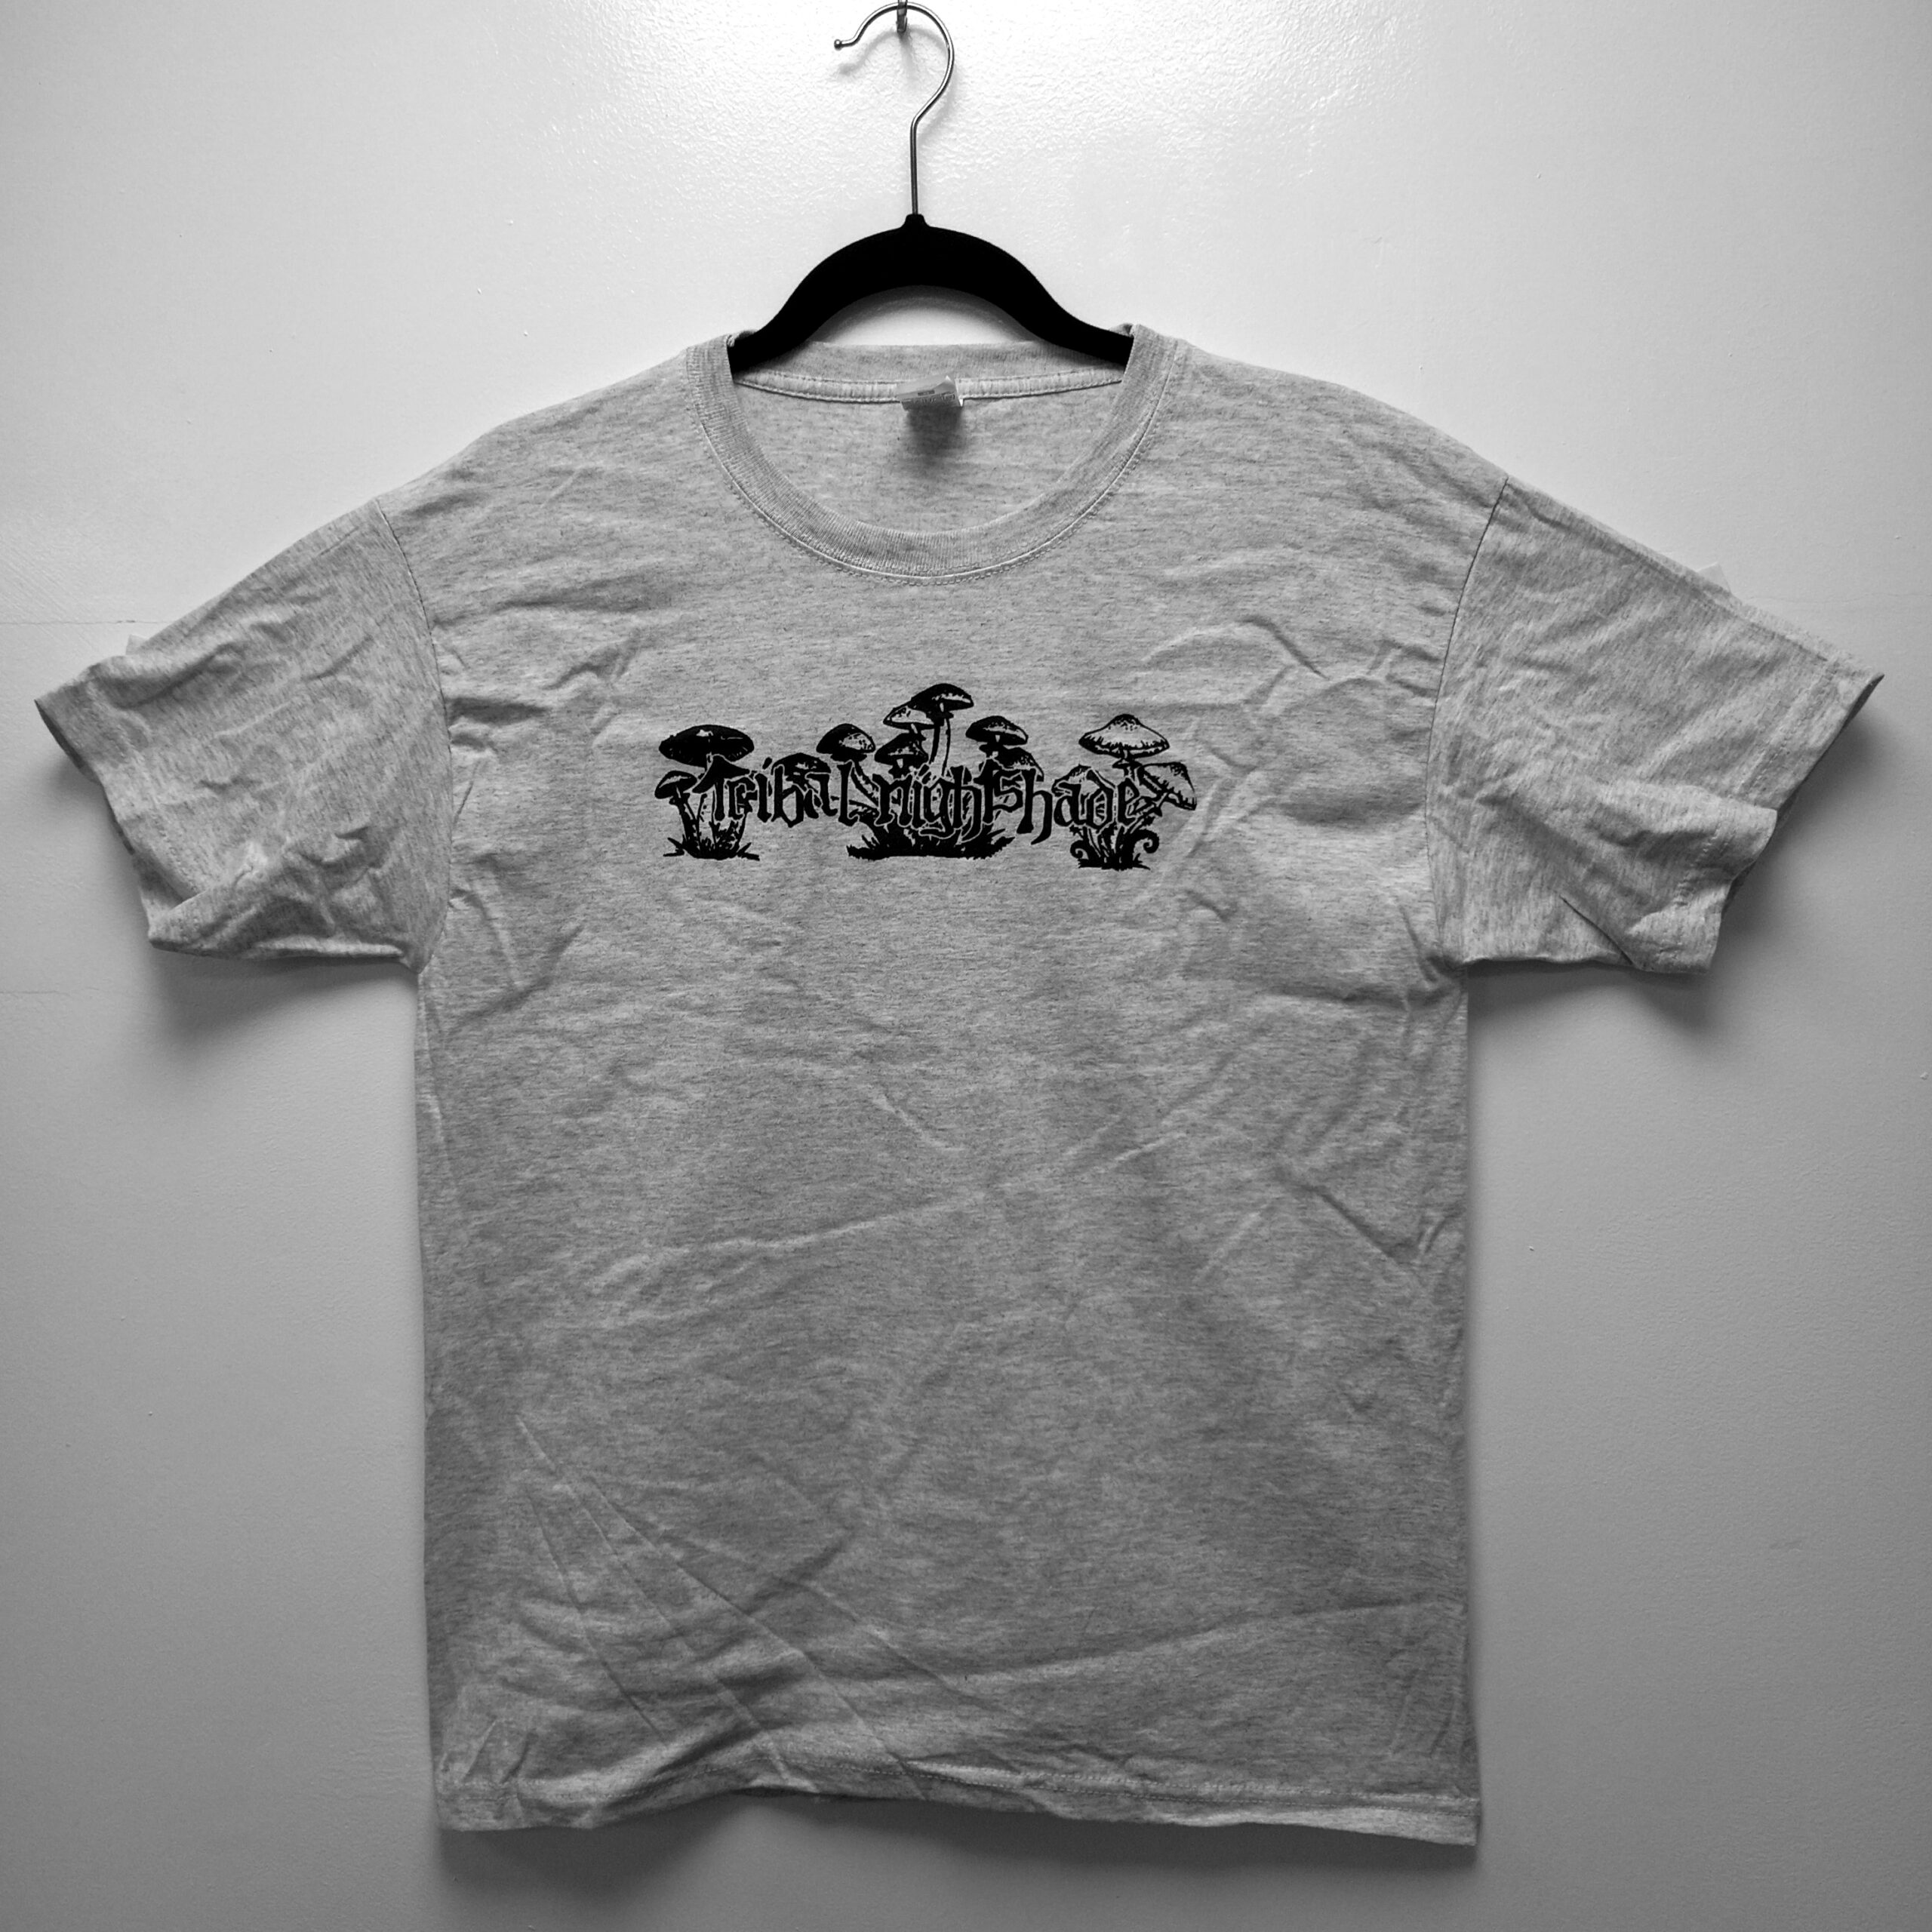 Tribal Nightshade – “Logo” T-Shirt – STOIC STRENGTH